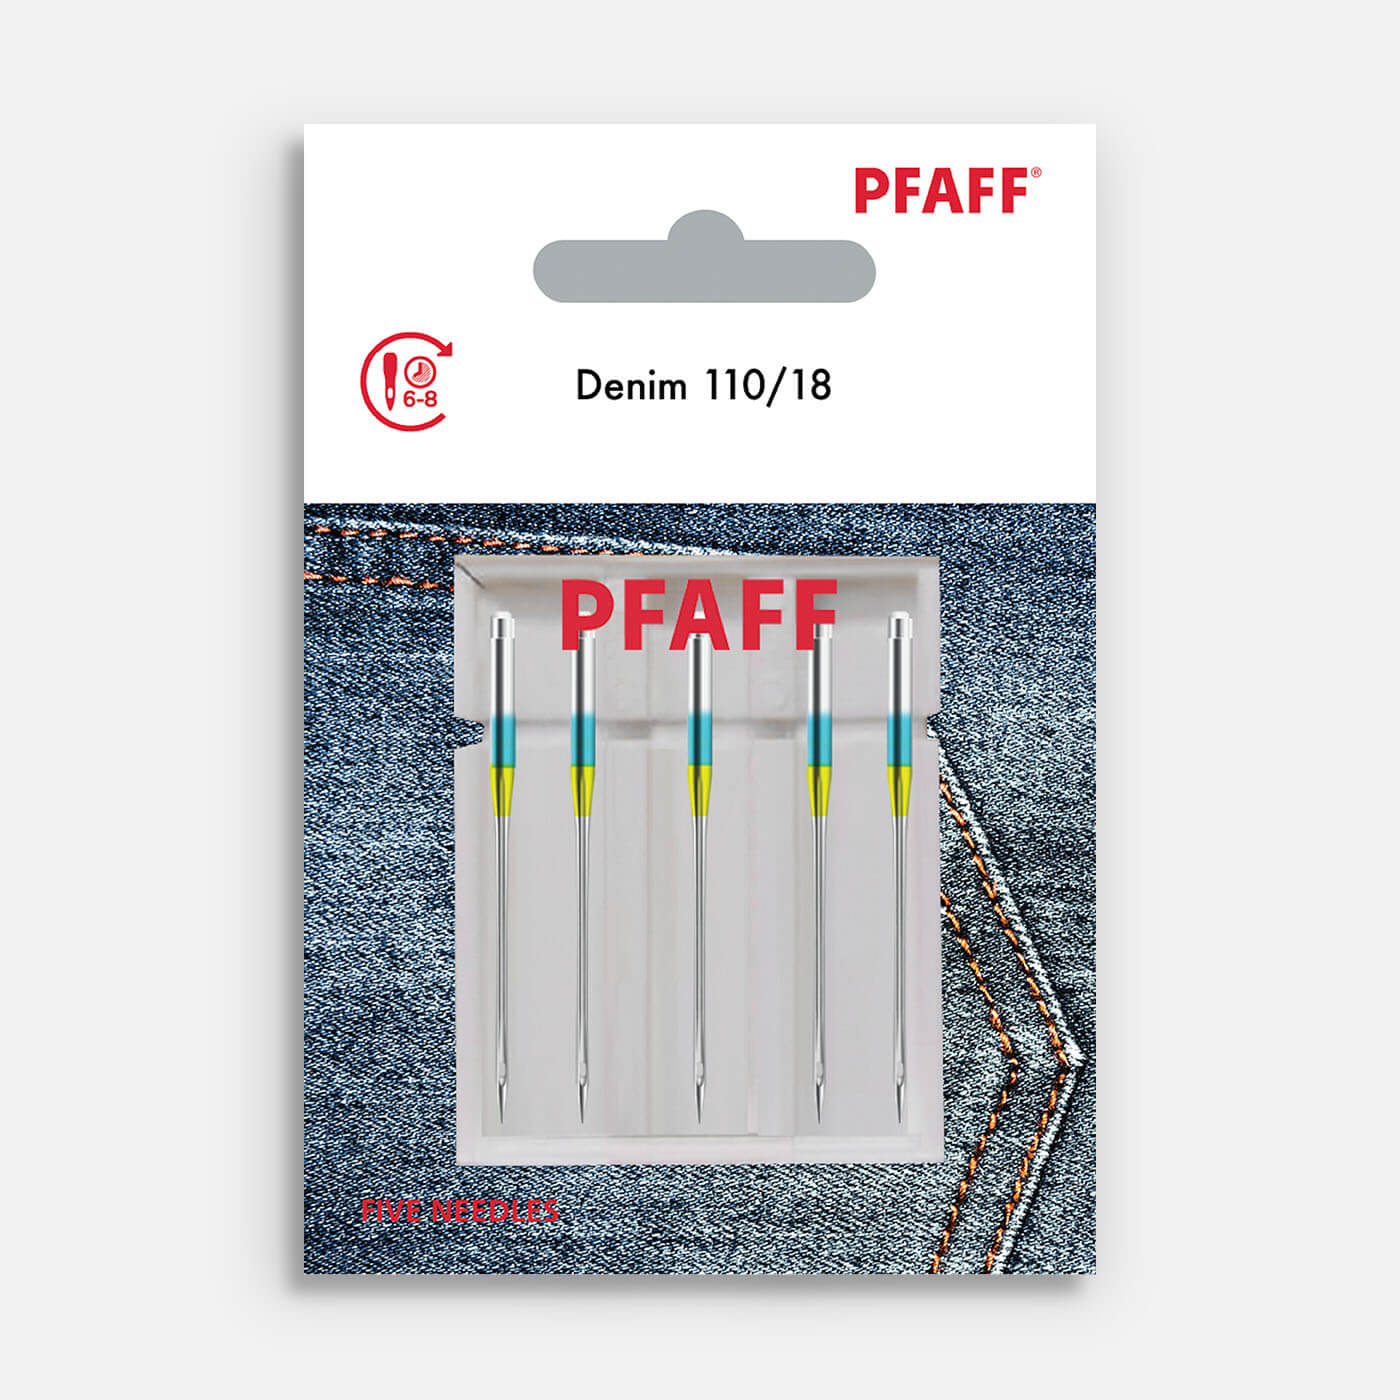 PFAFF Denim 110/18 Needles (5 Pack)